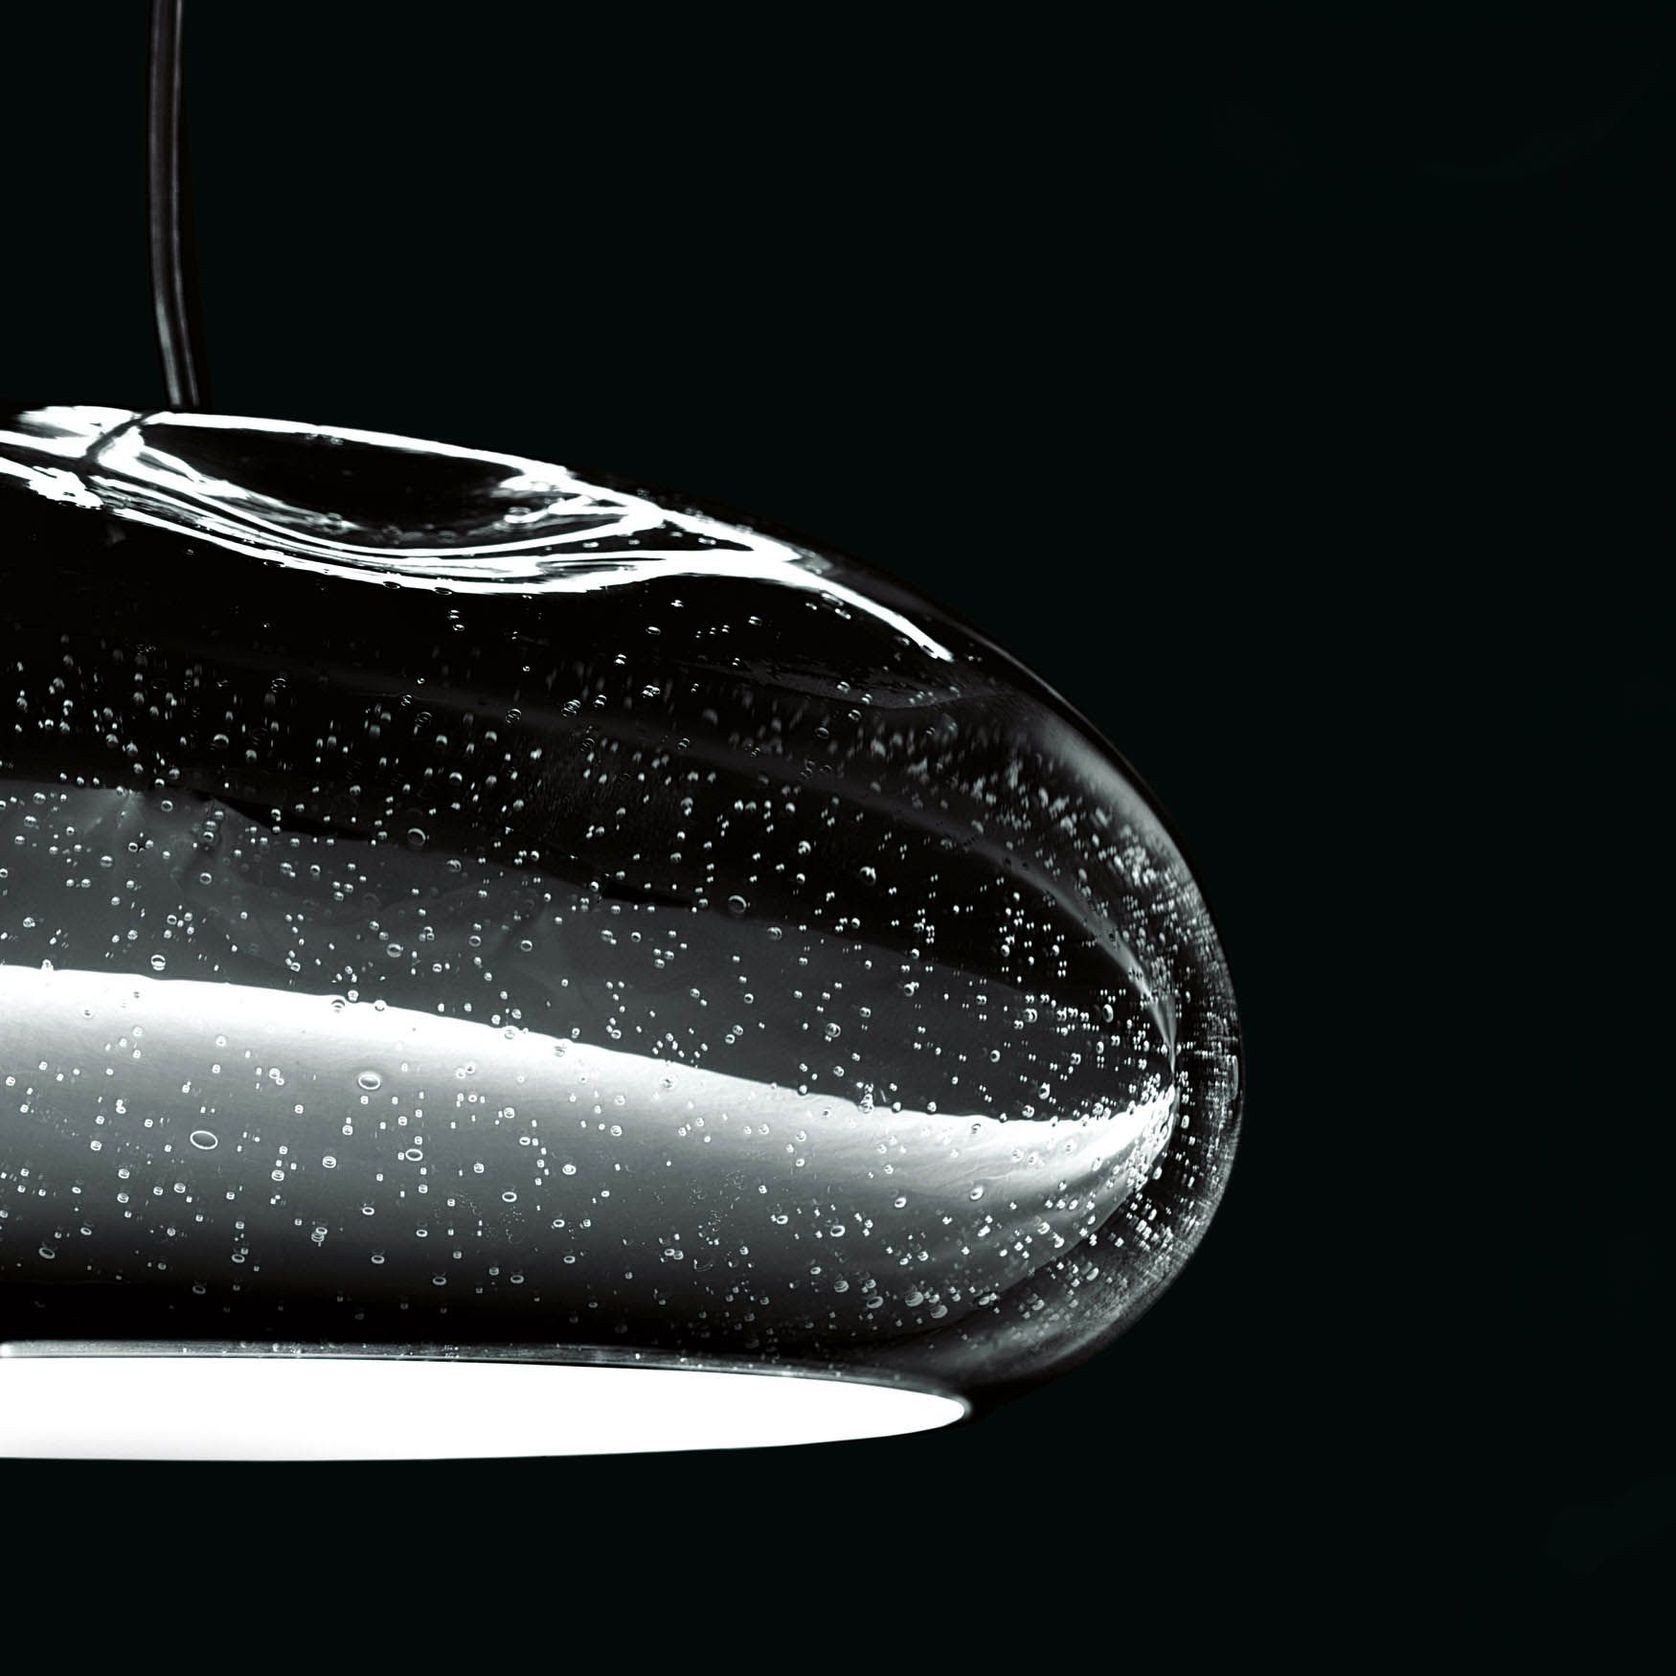 Mercure Pendant Lamp by Leucos gallery detail image